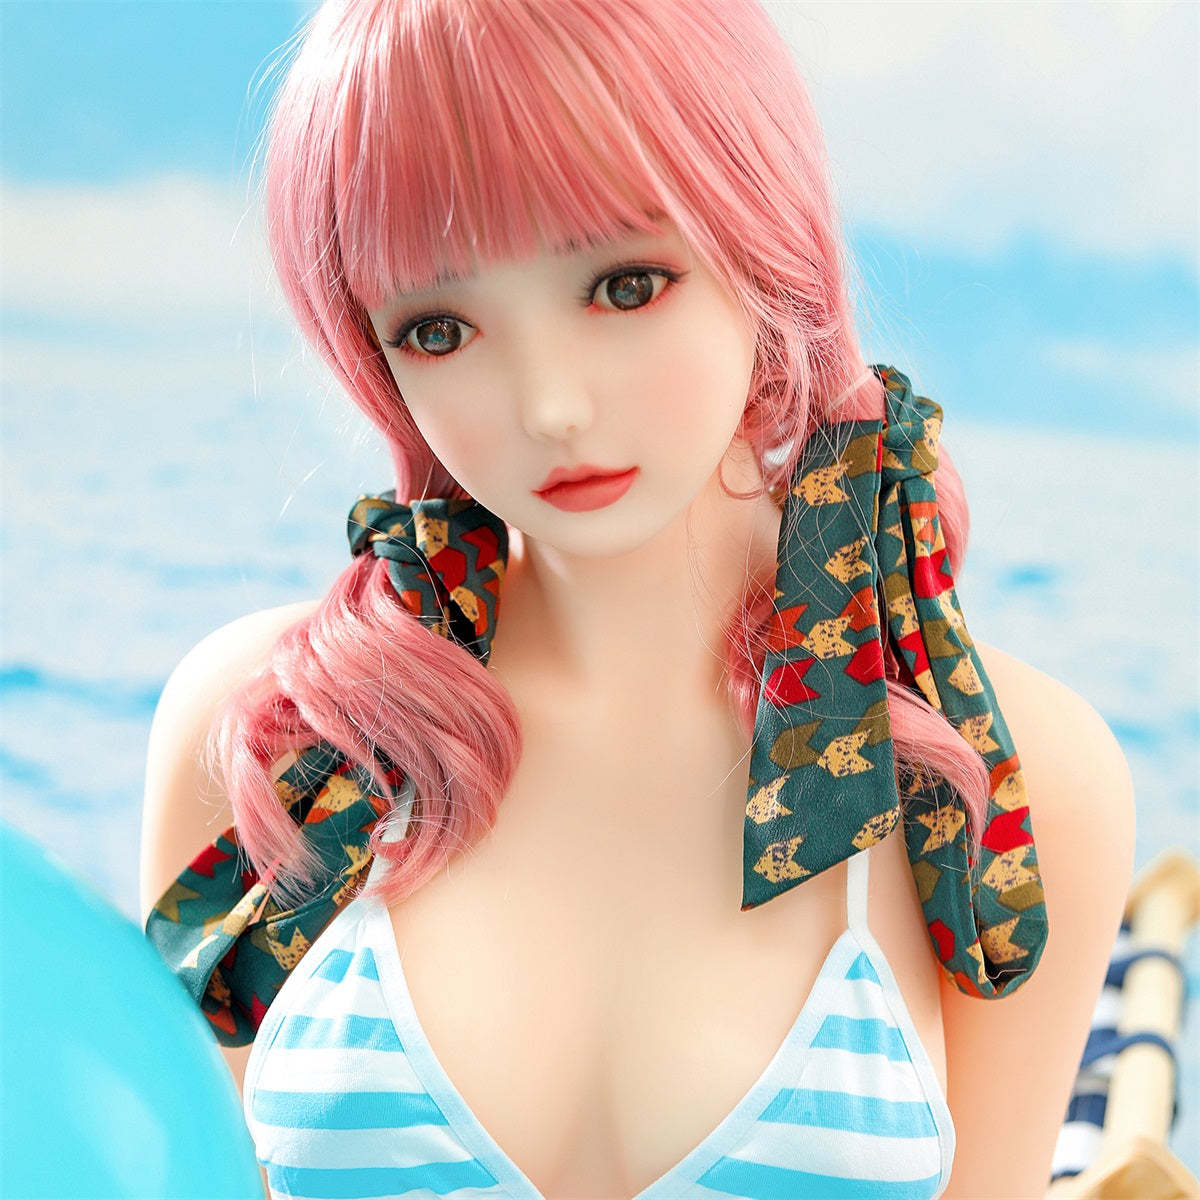 SY Doll 4ft 10/148cm Bikini Style Youth Energetic Beauty Doll -Bonnie